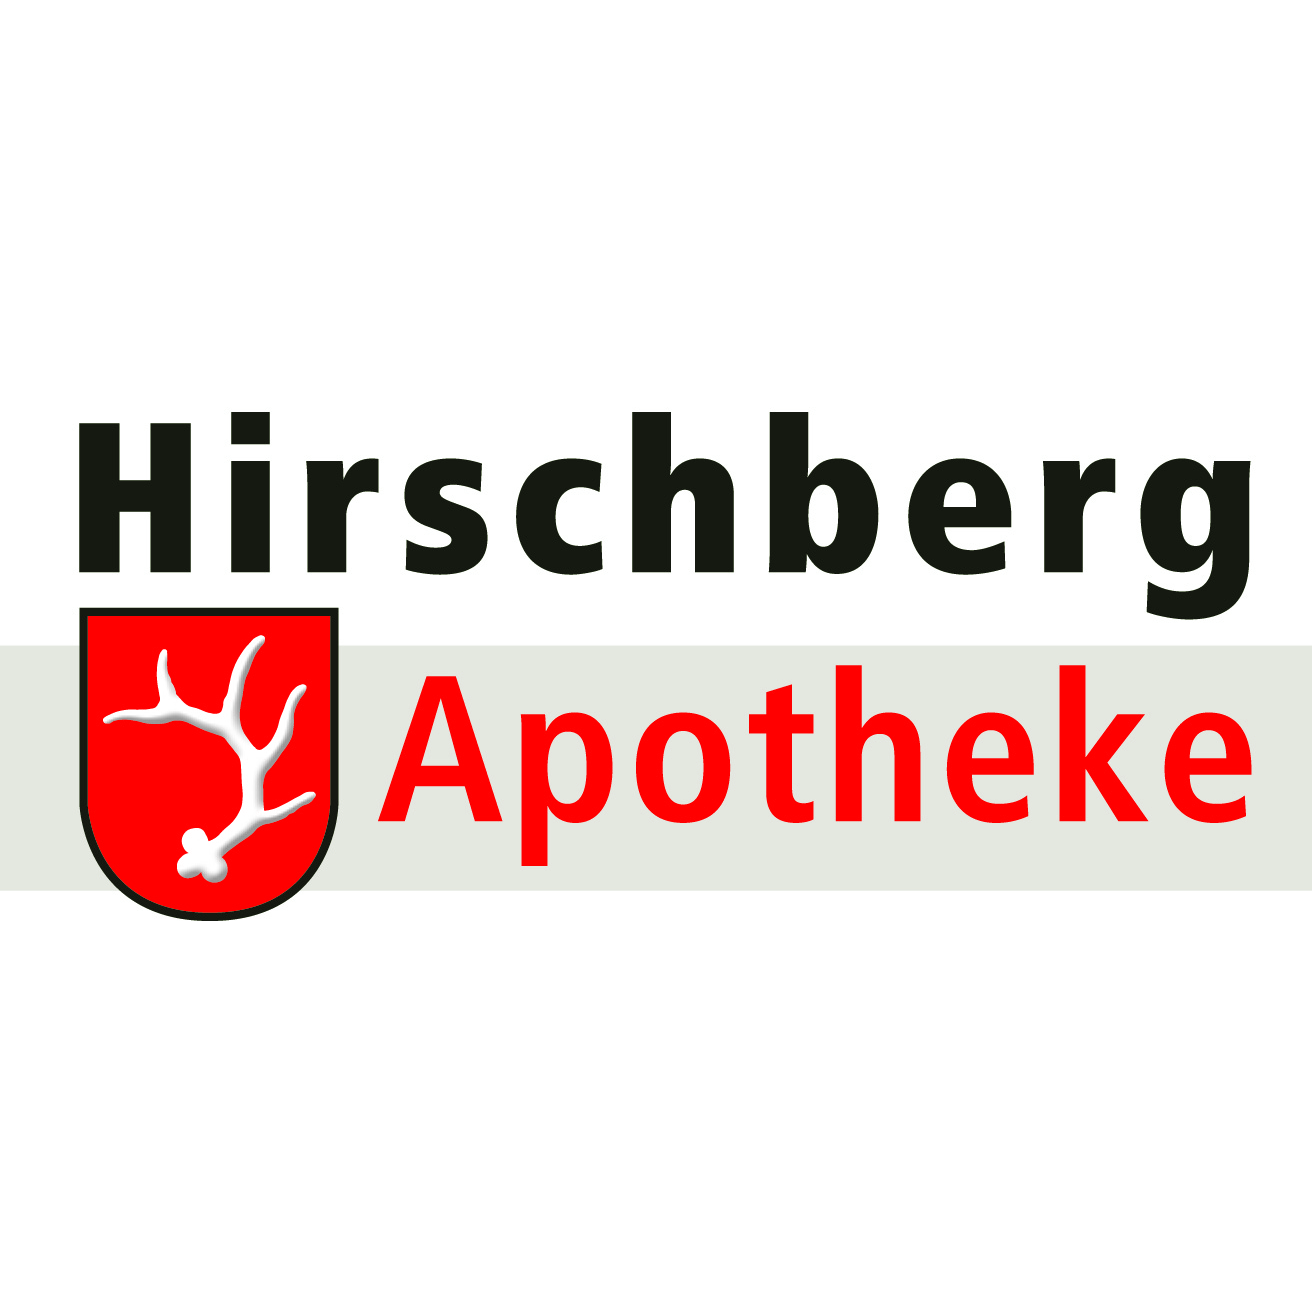 Hirschberg-Apotheke in Hirschberg an der Bergstrasse - Logo